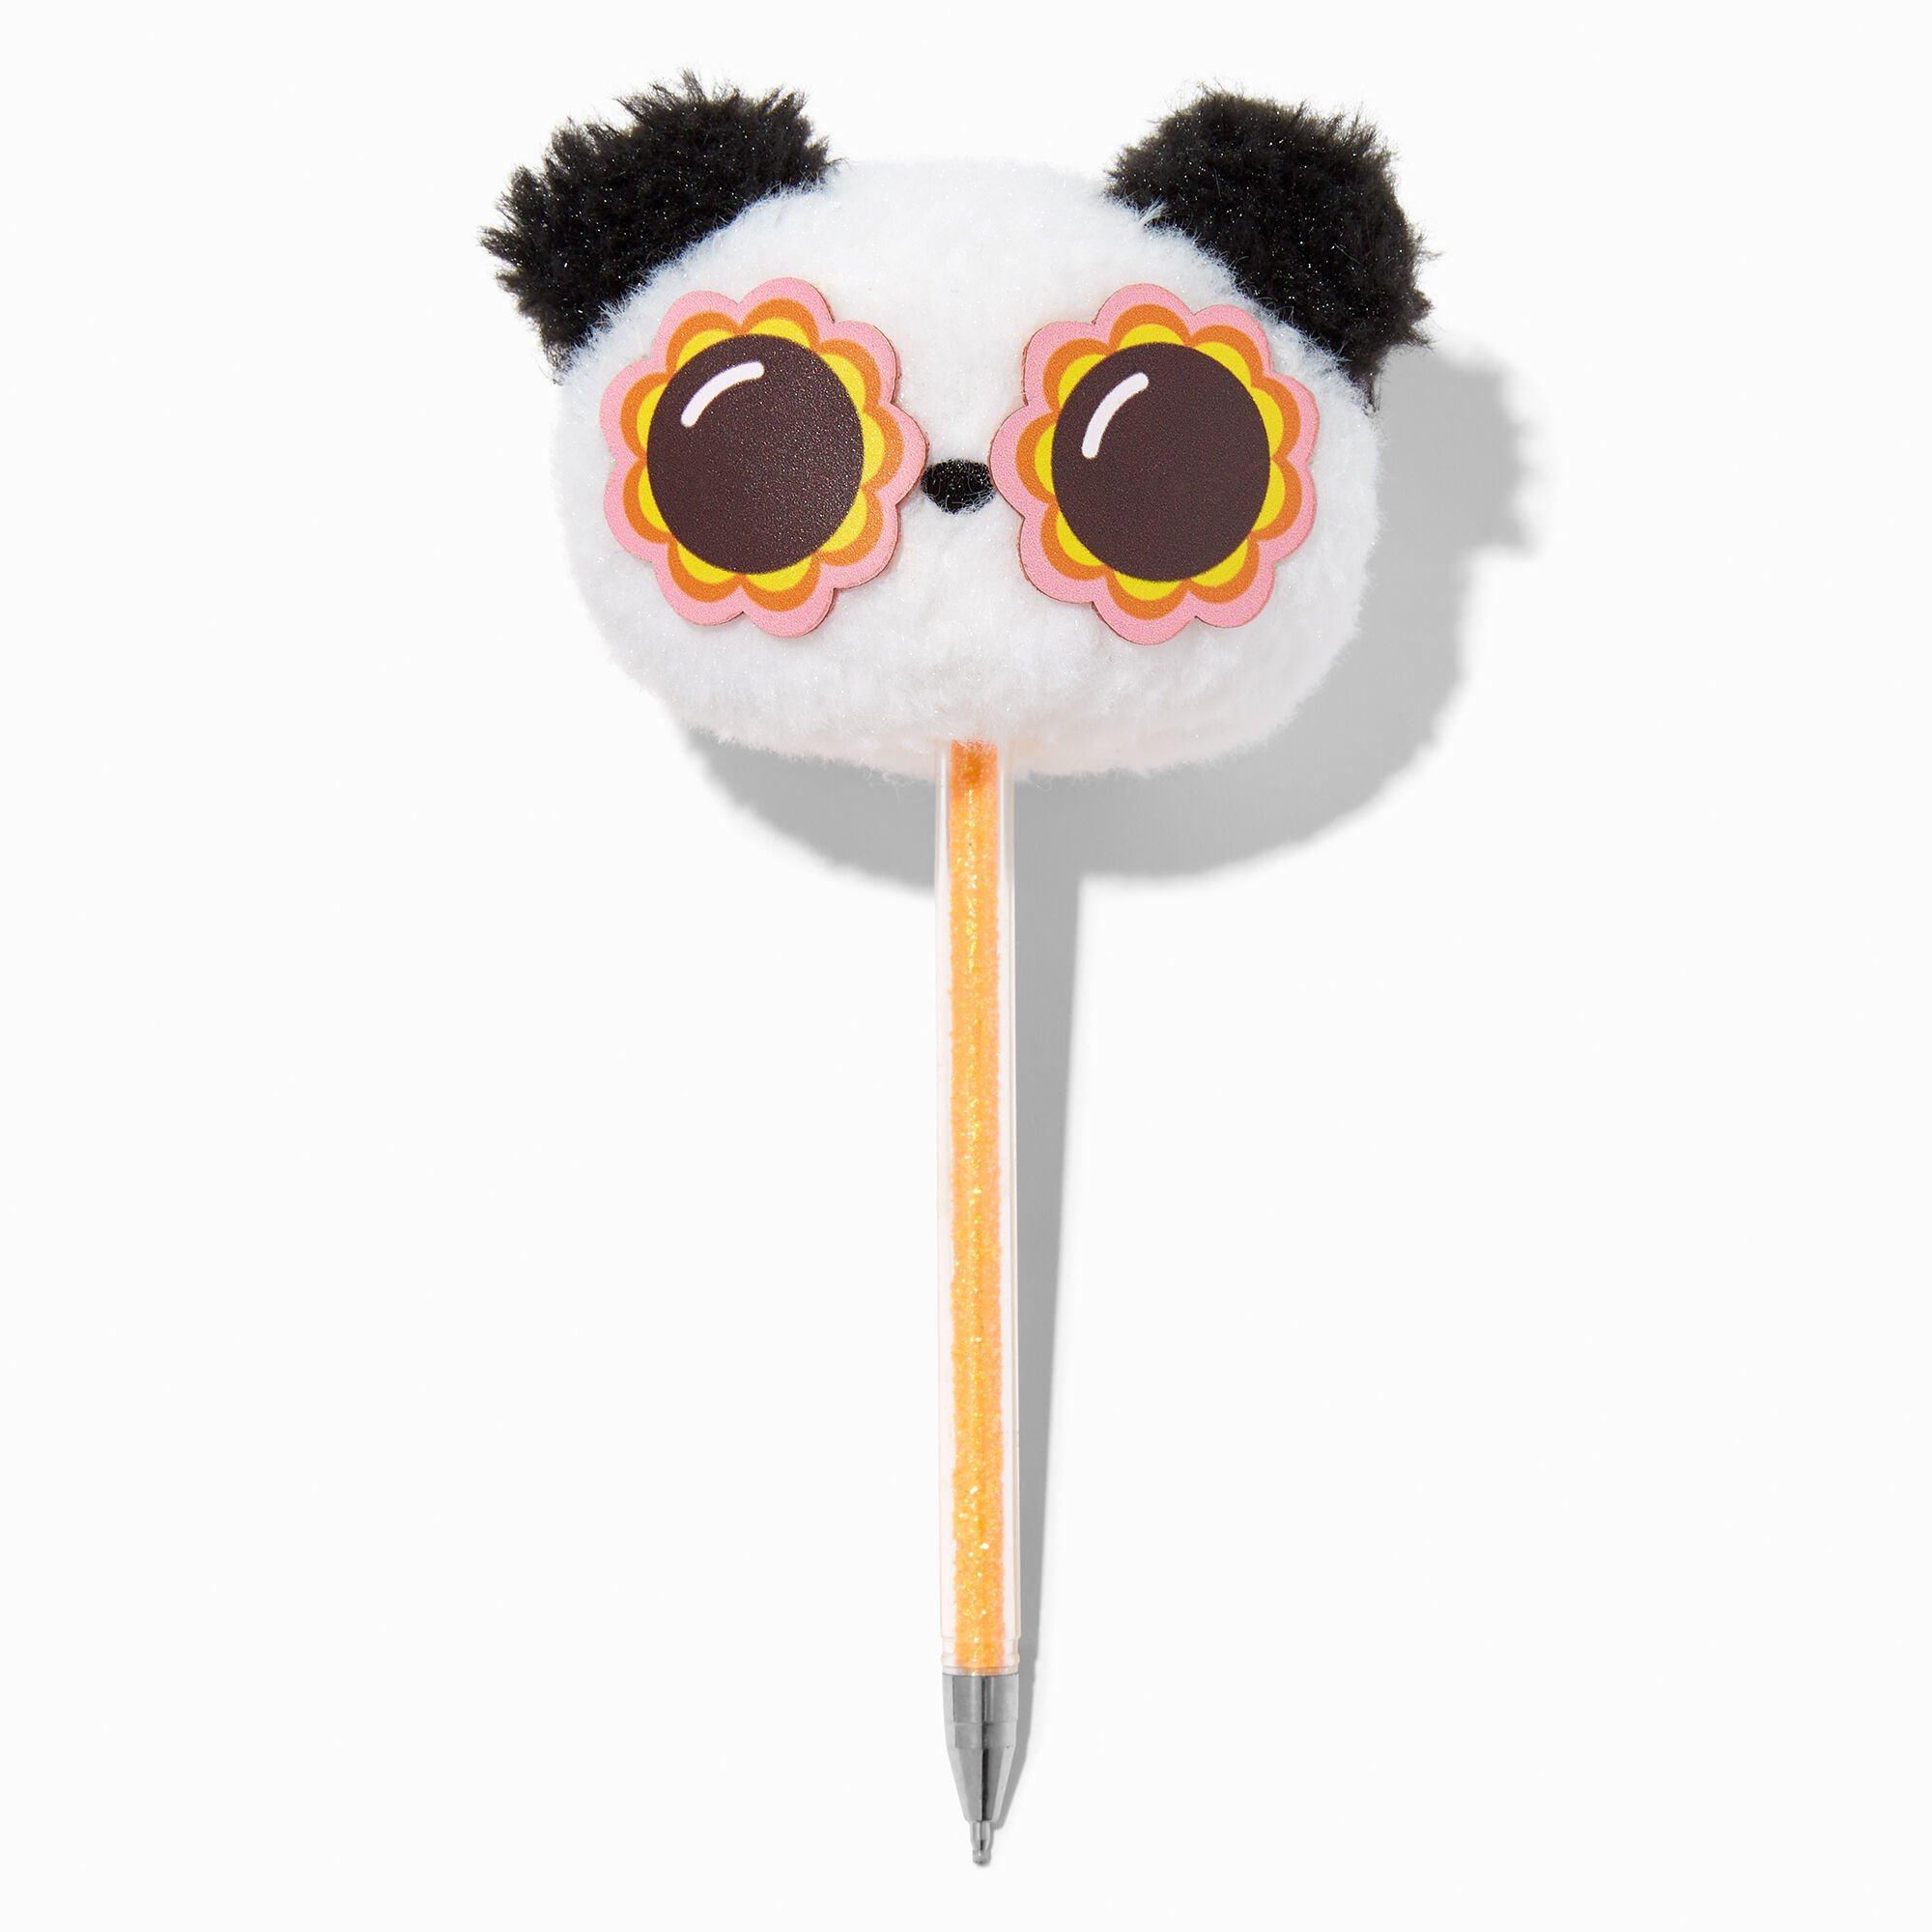 View Claires Fuzzy Sunglasses Panda Pom Pen information